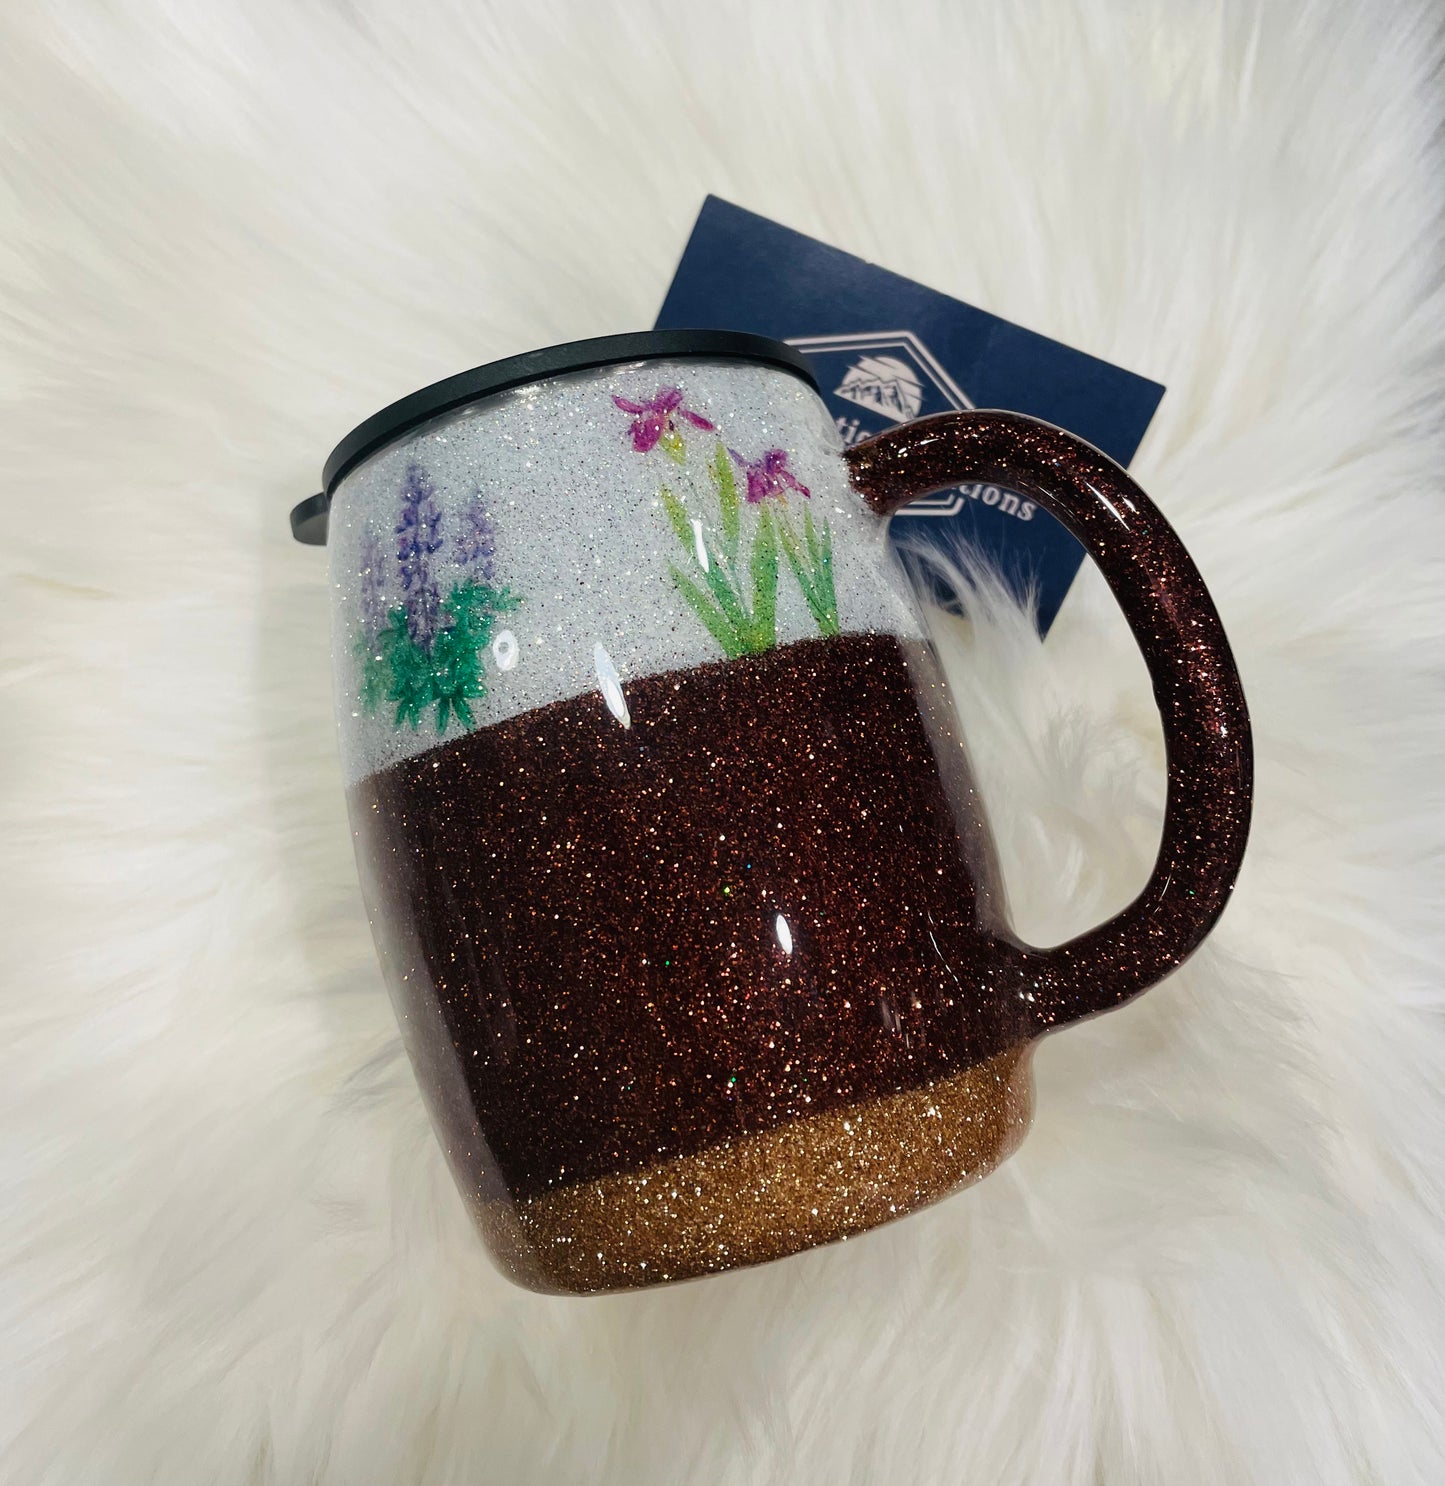 Xtra Alaska flowers mug